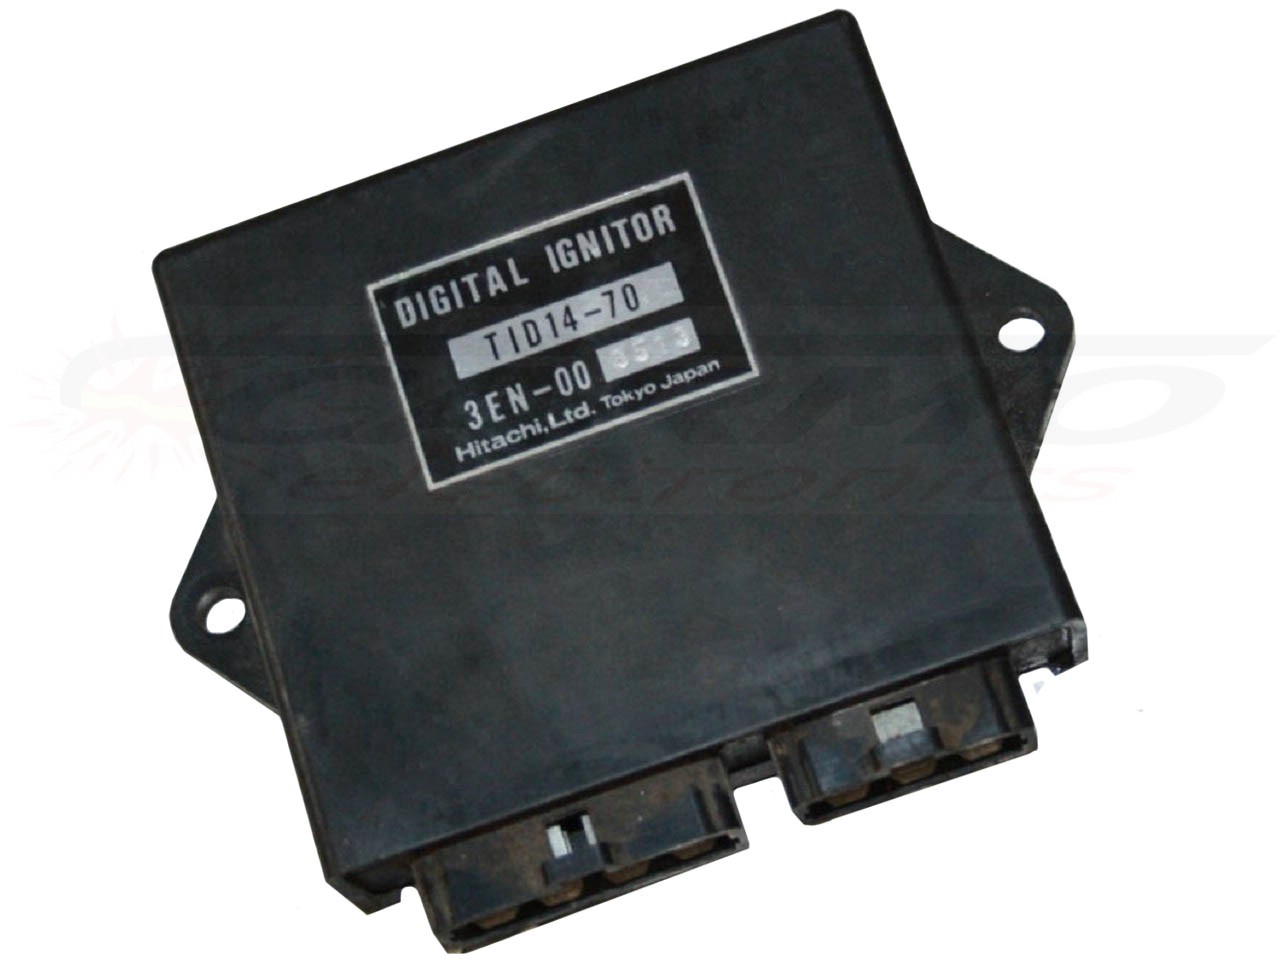 FZR400 Exup TCI CDI dispositif de commande boîte noire (TID14-70, 3EN-00)